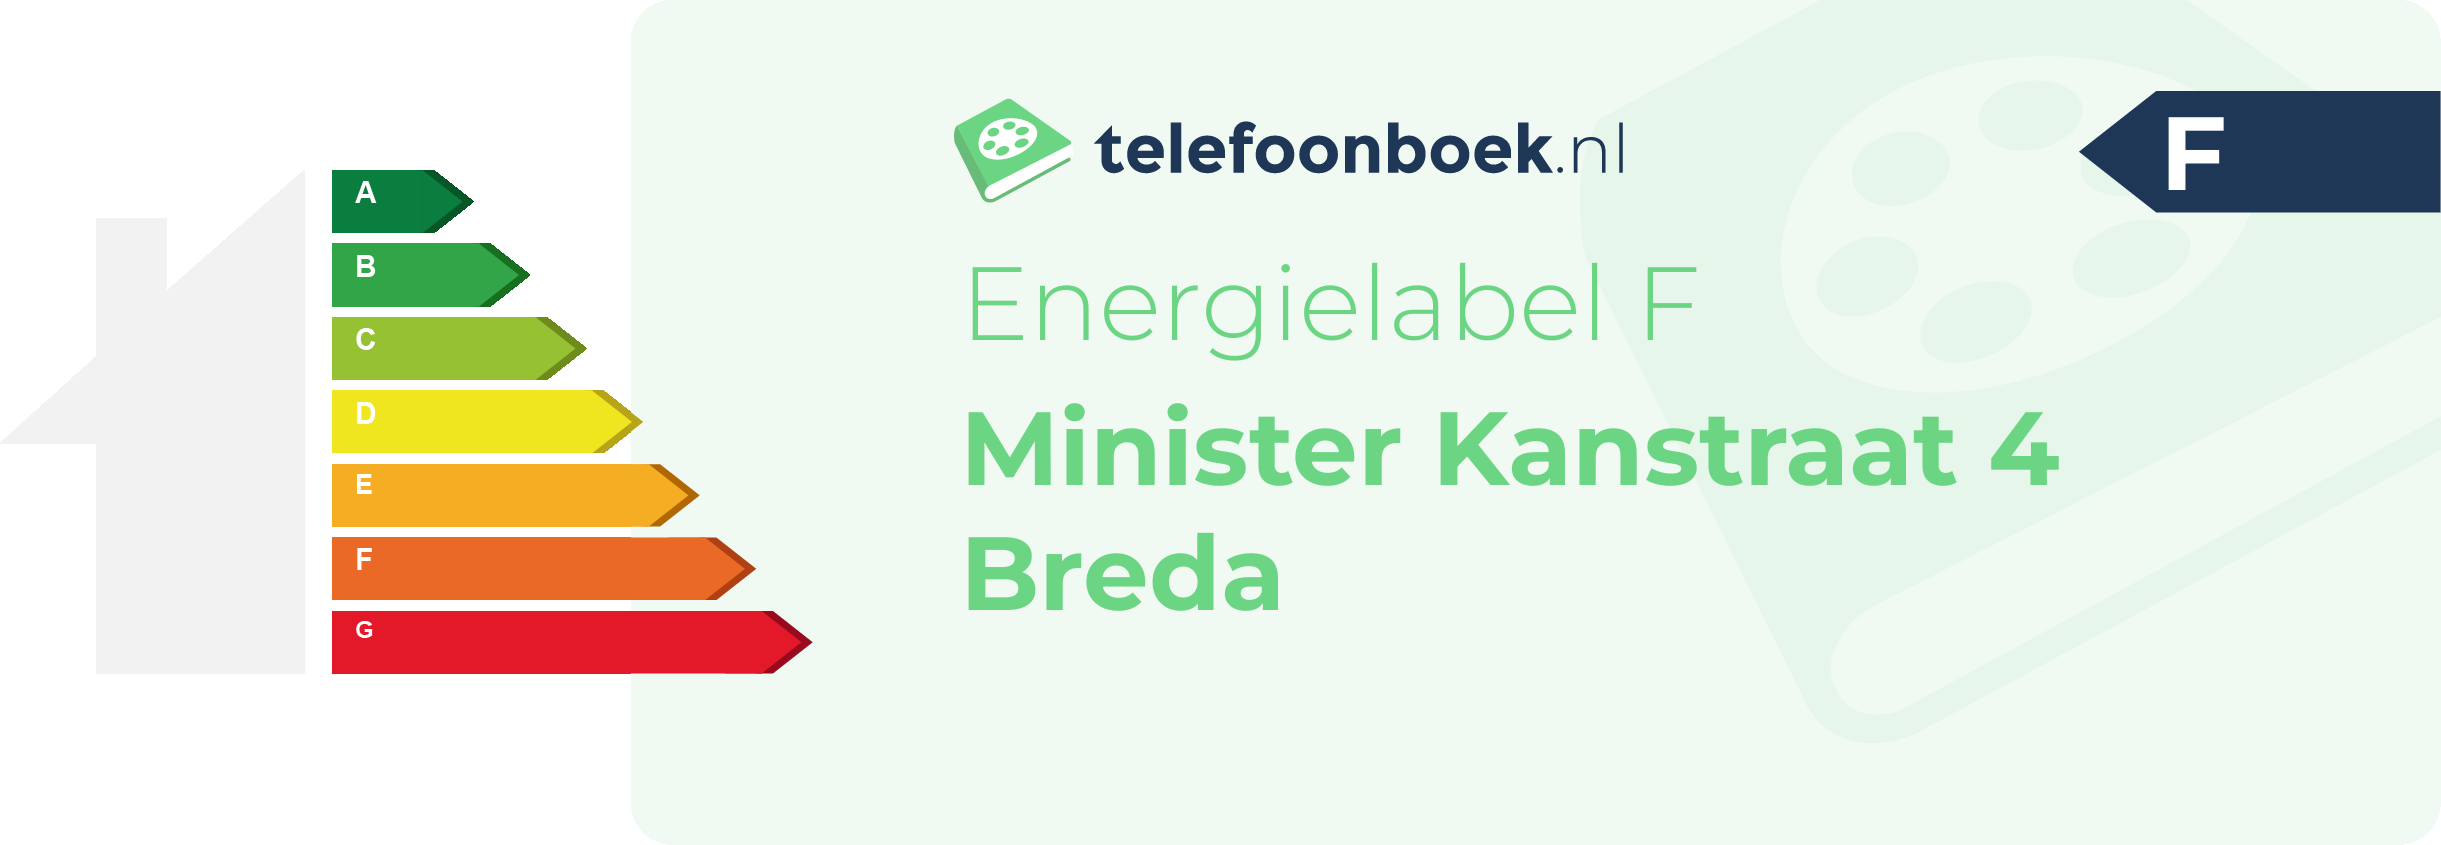 Energielabel Minister Kanstraat 4 Breda